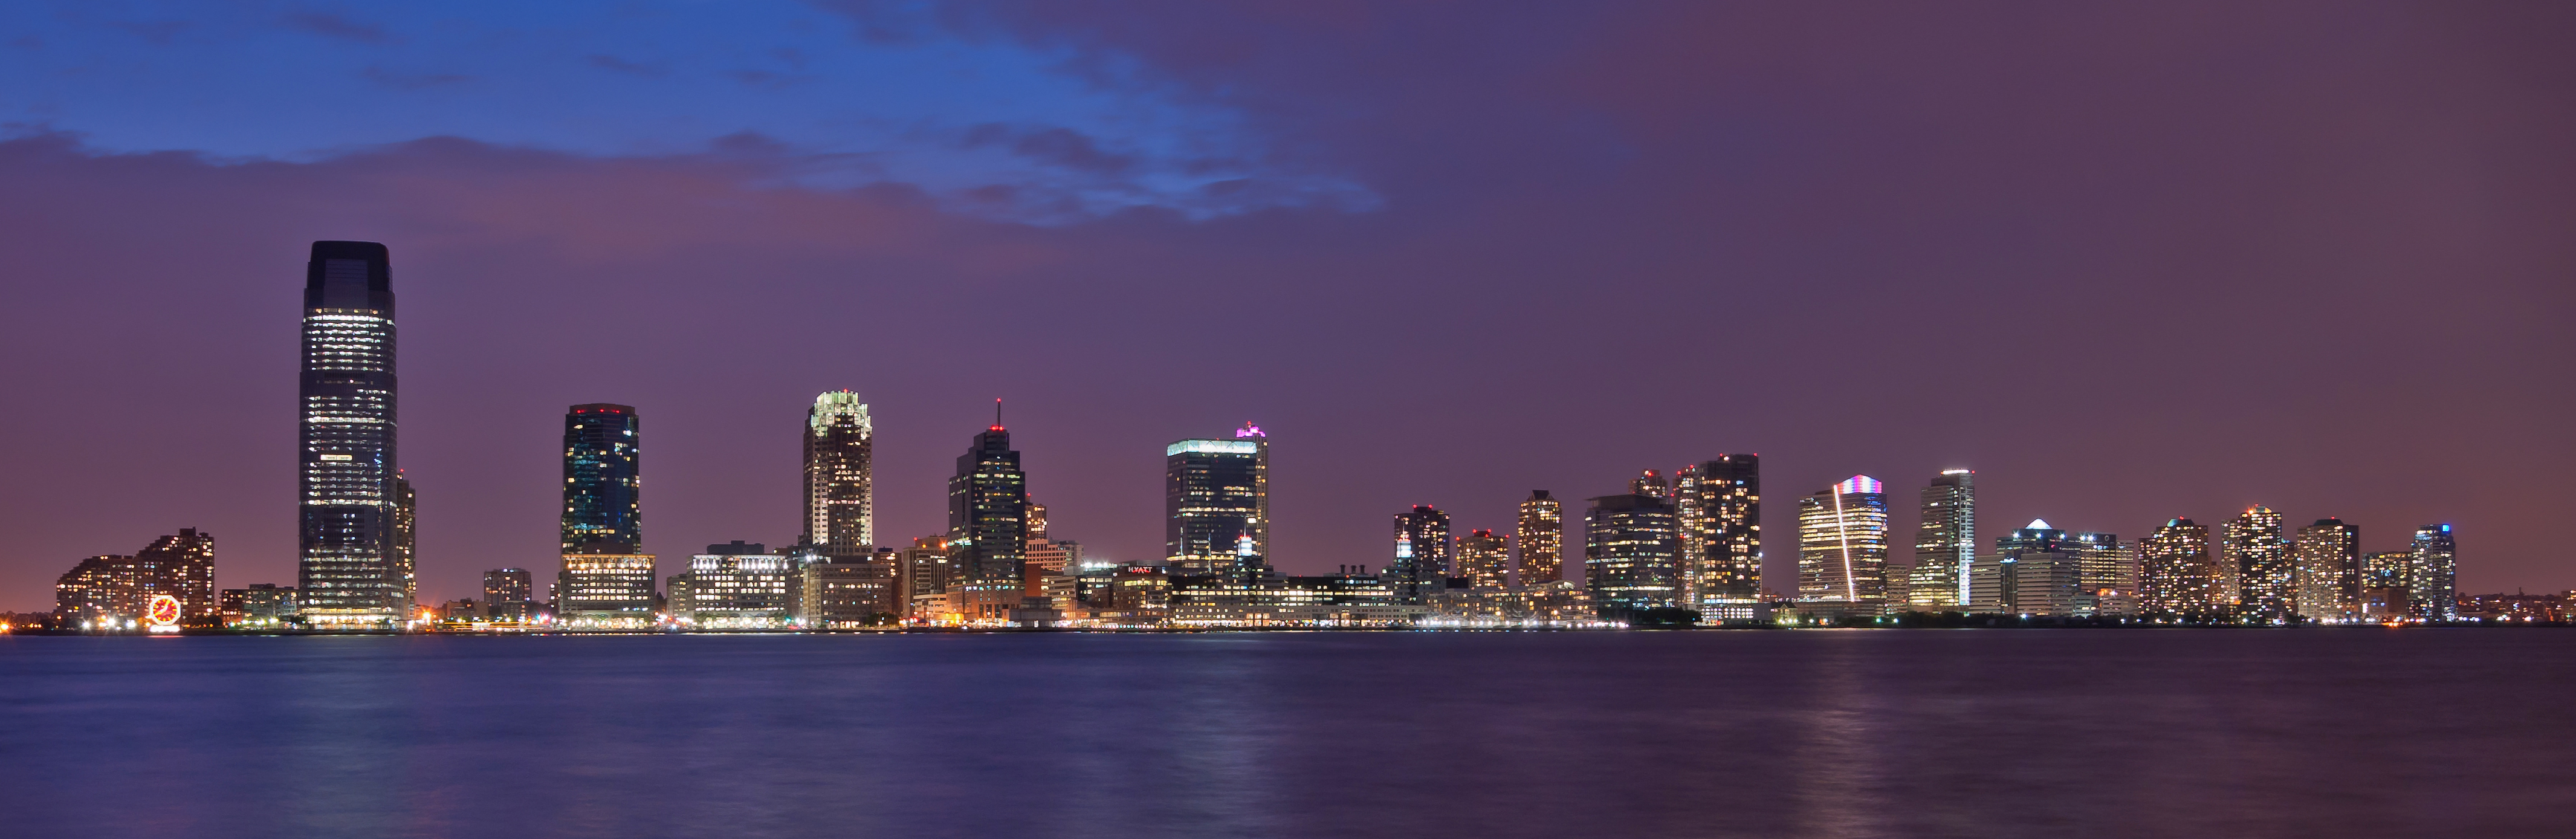 File:New Jersey Skyline from Battery Park NY - cropped.jpg - Wikimedia  Commons